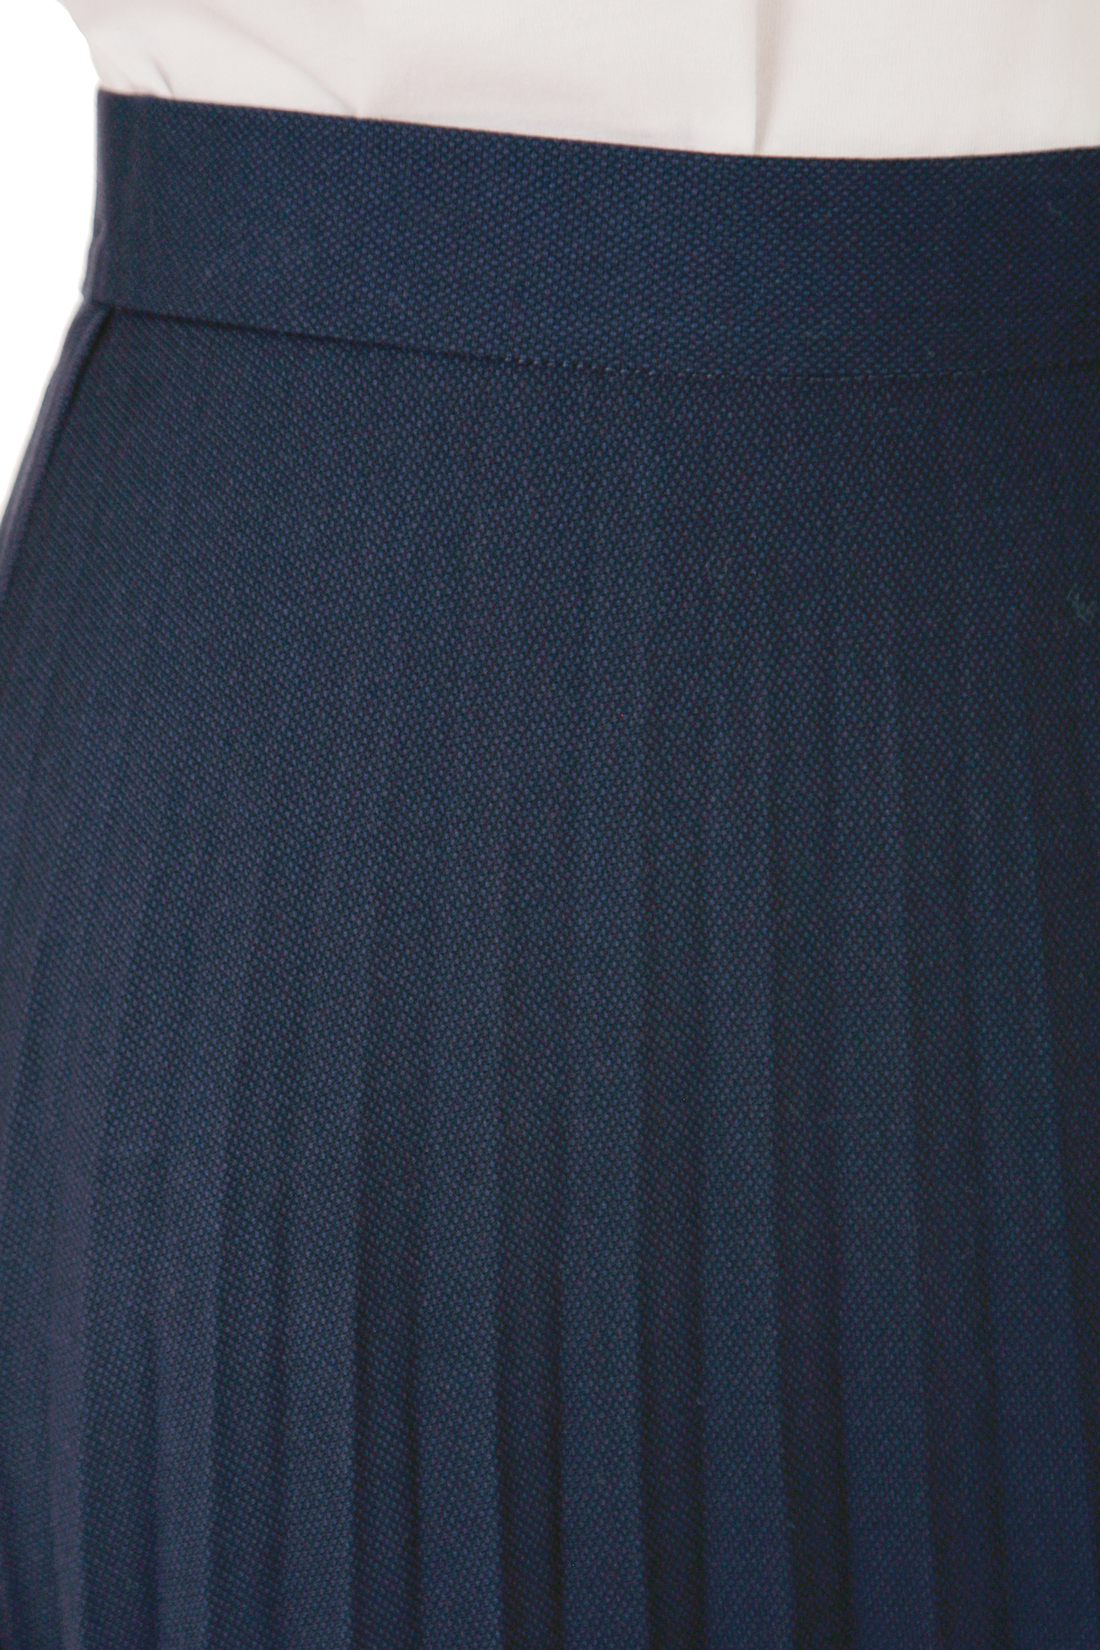 Синяя плиссированная юбка (арт. baon B478506), размер S, цвет синий Синяя плиссированная юбка (арт. baon B478506) - фото 4